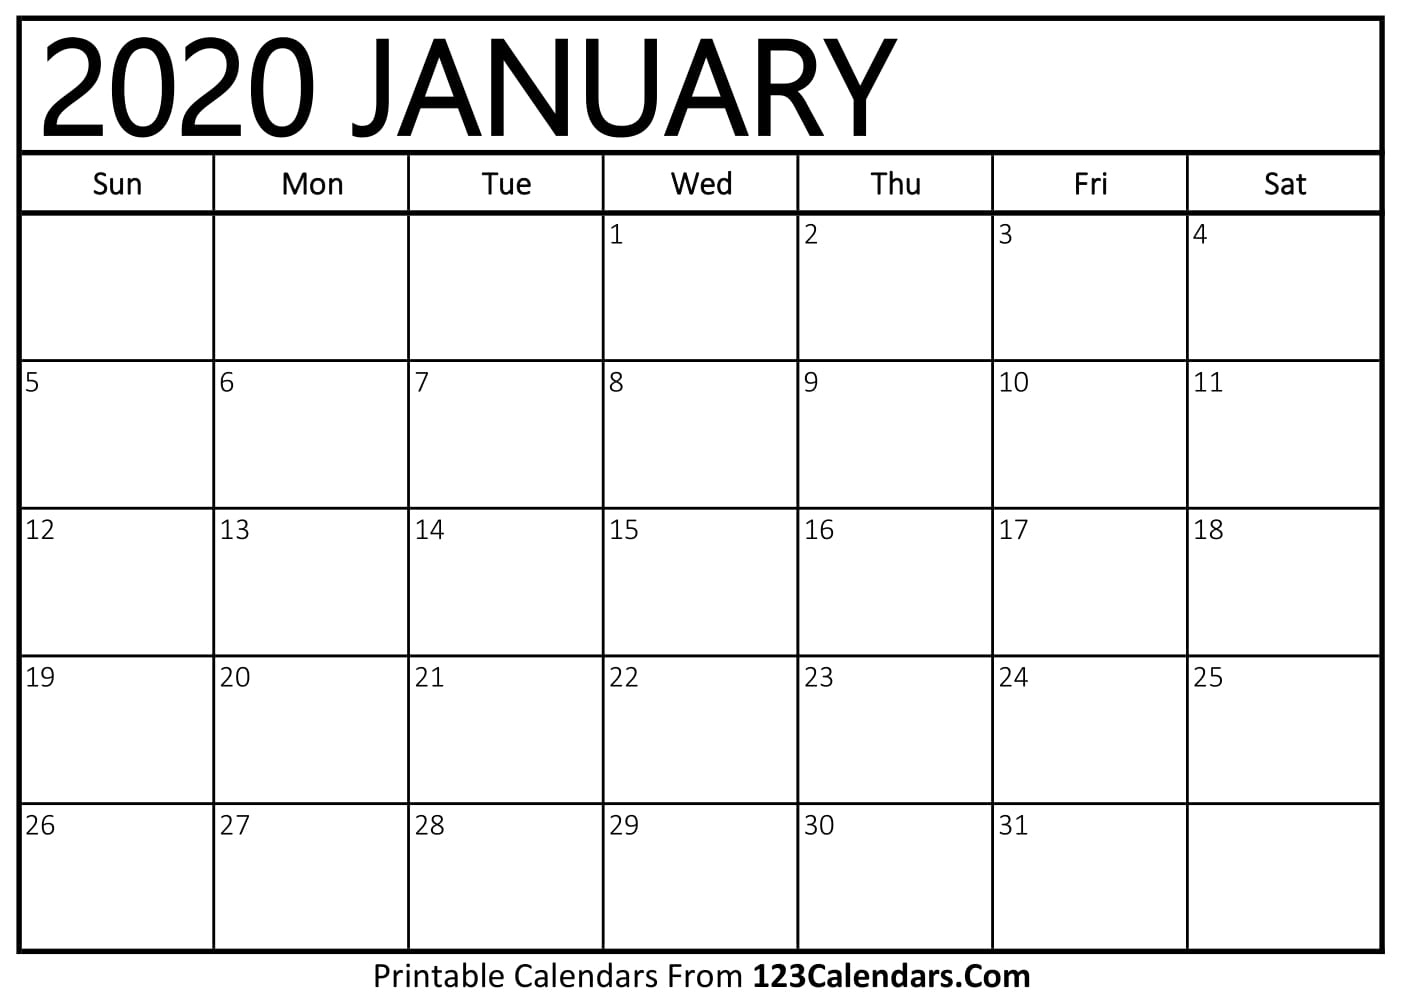 Free Printable Calendar | 123Calendars Dashing Monthly Calendar Template You Can Type In